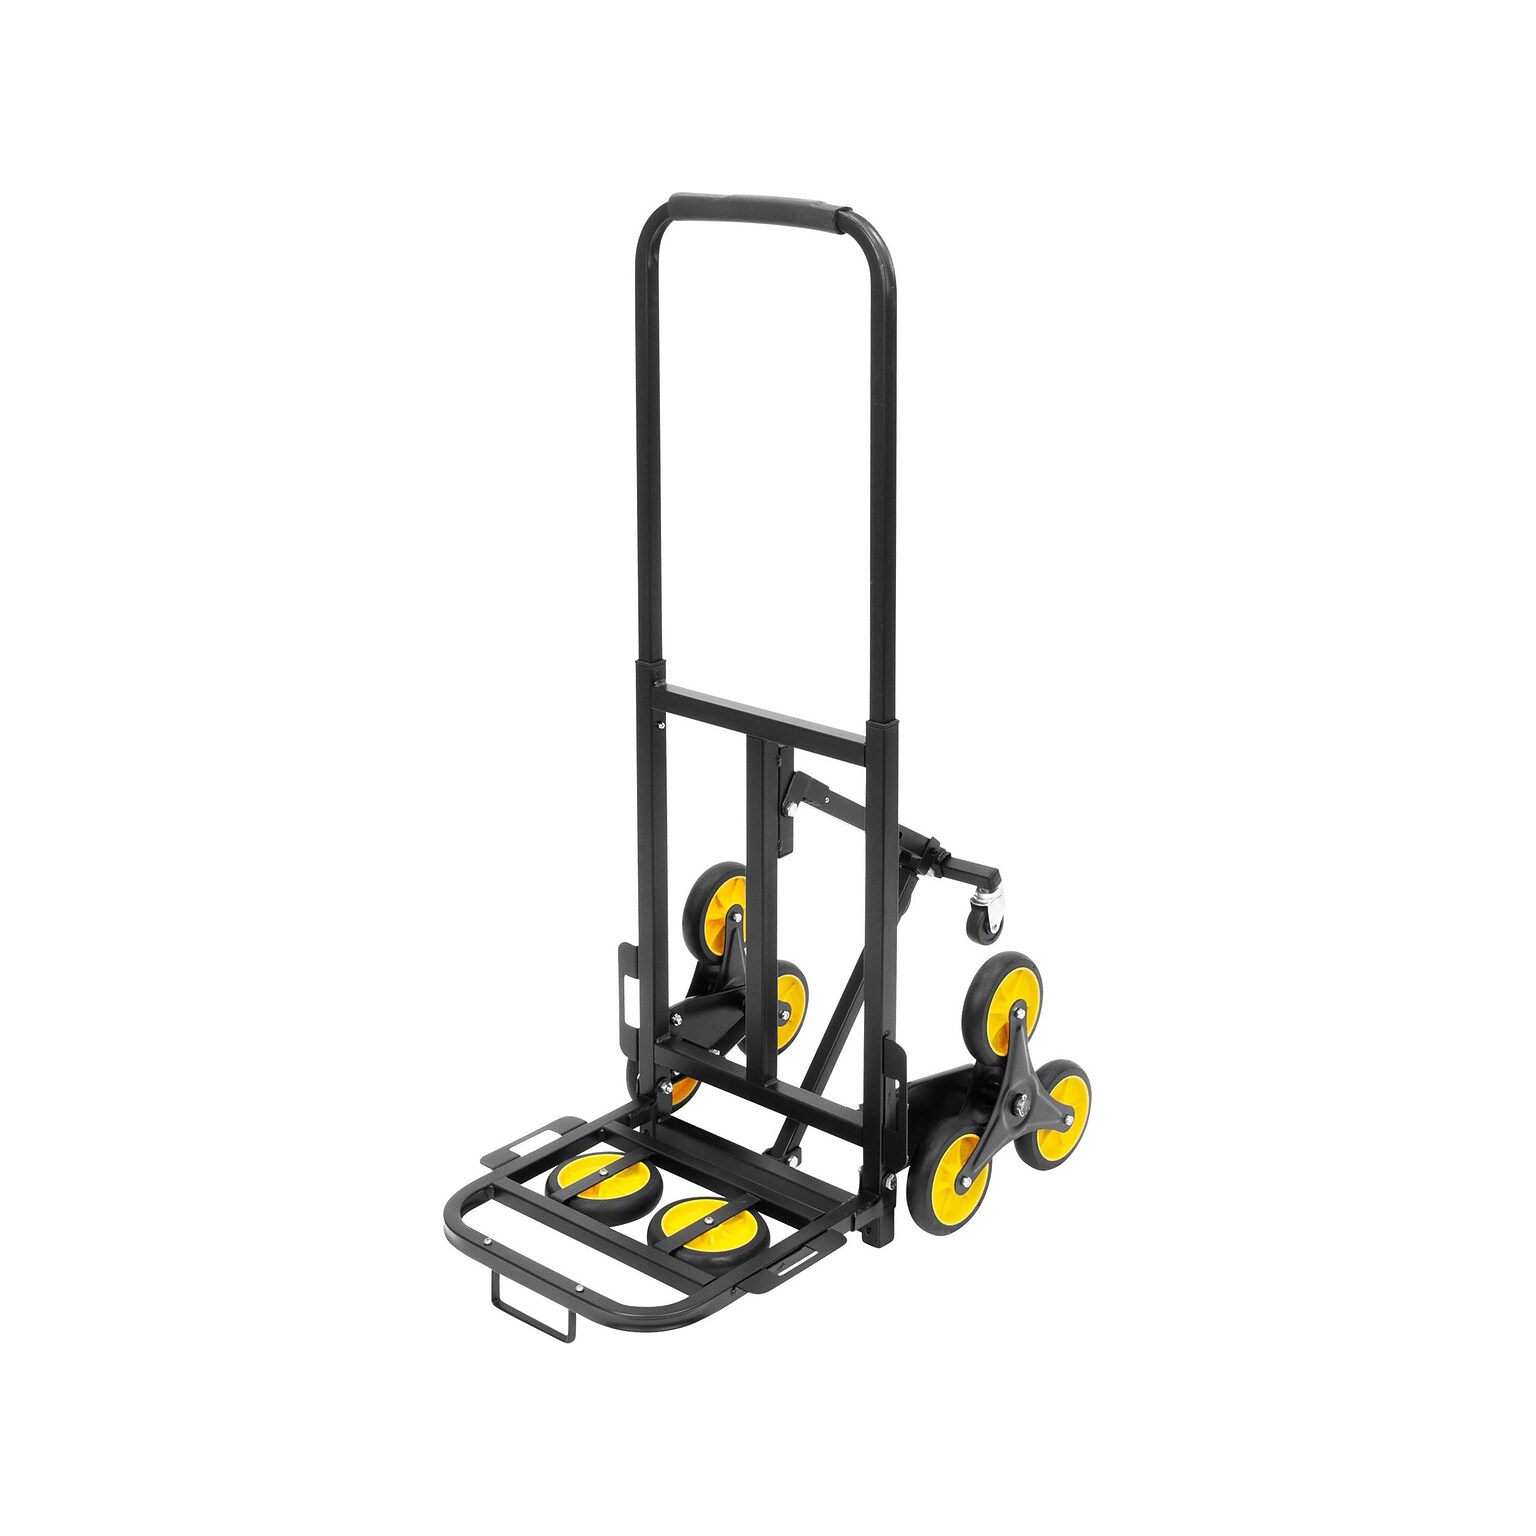 Mount-It! Stair Climber Hand Truck, 330 lb. Capacity, Black/Yellow (MI-924)